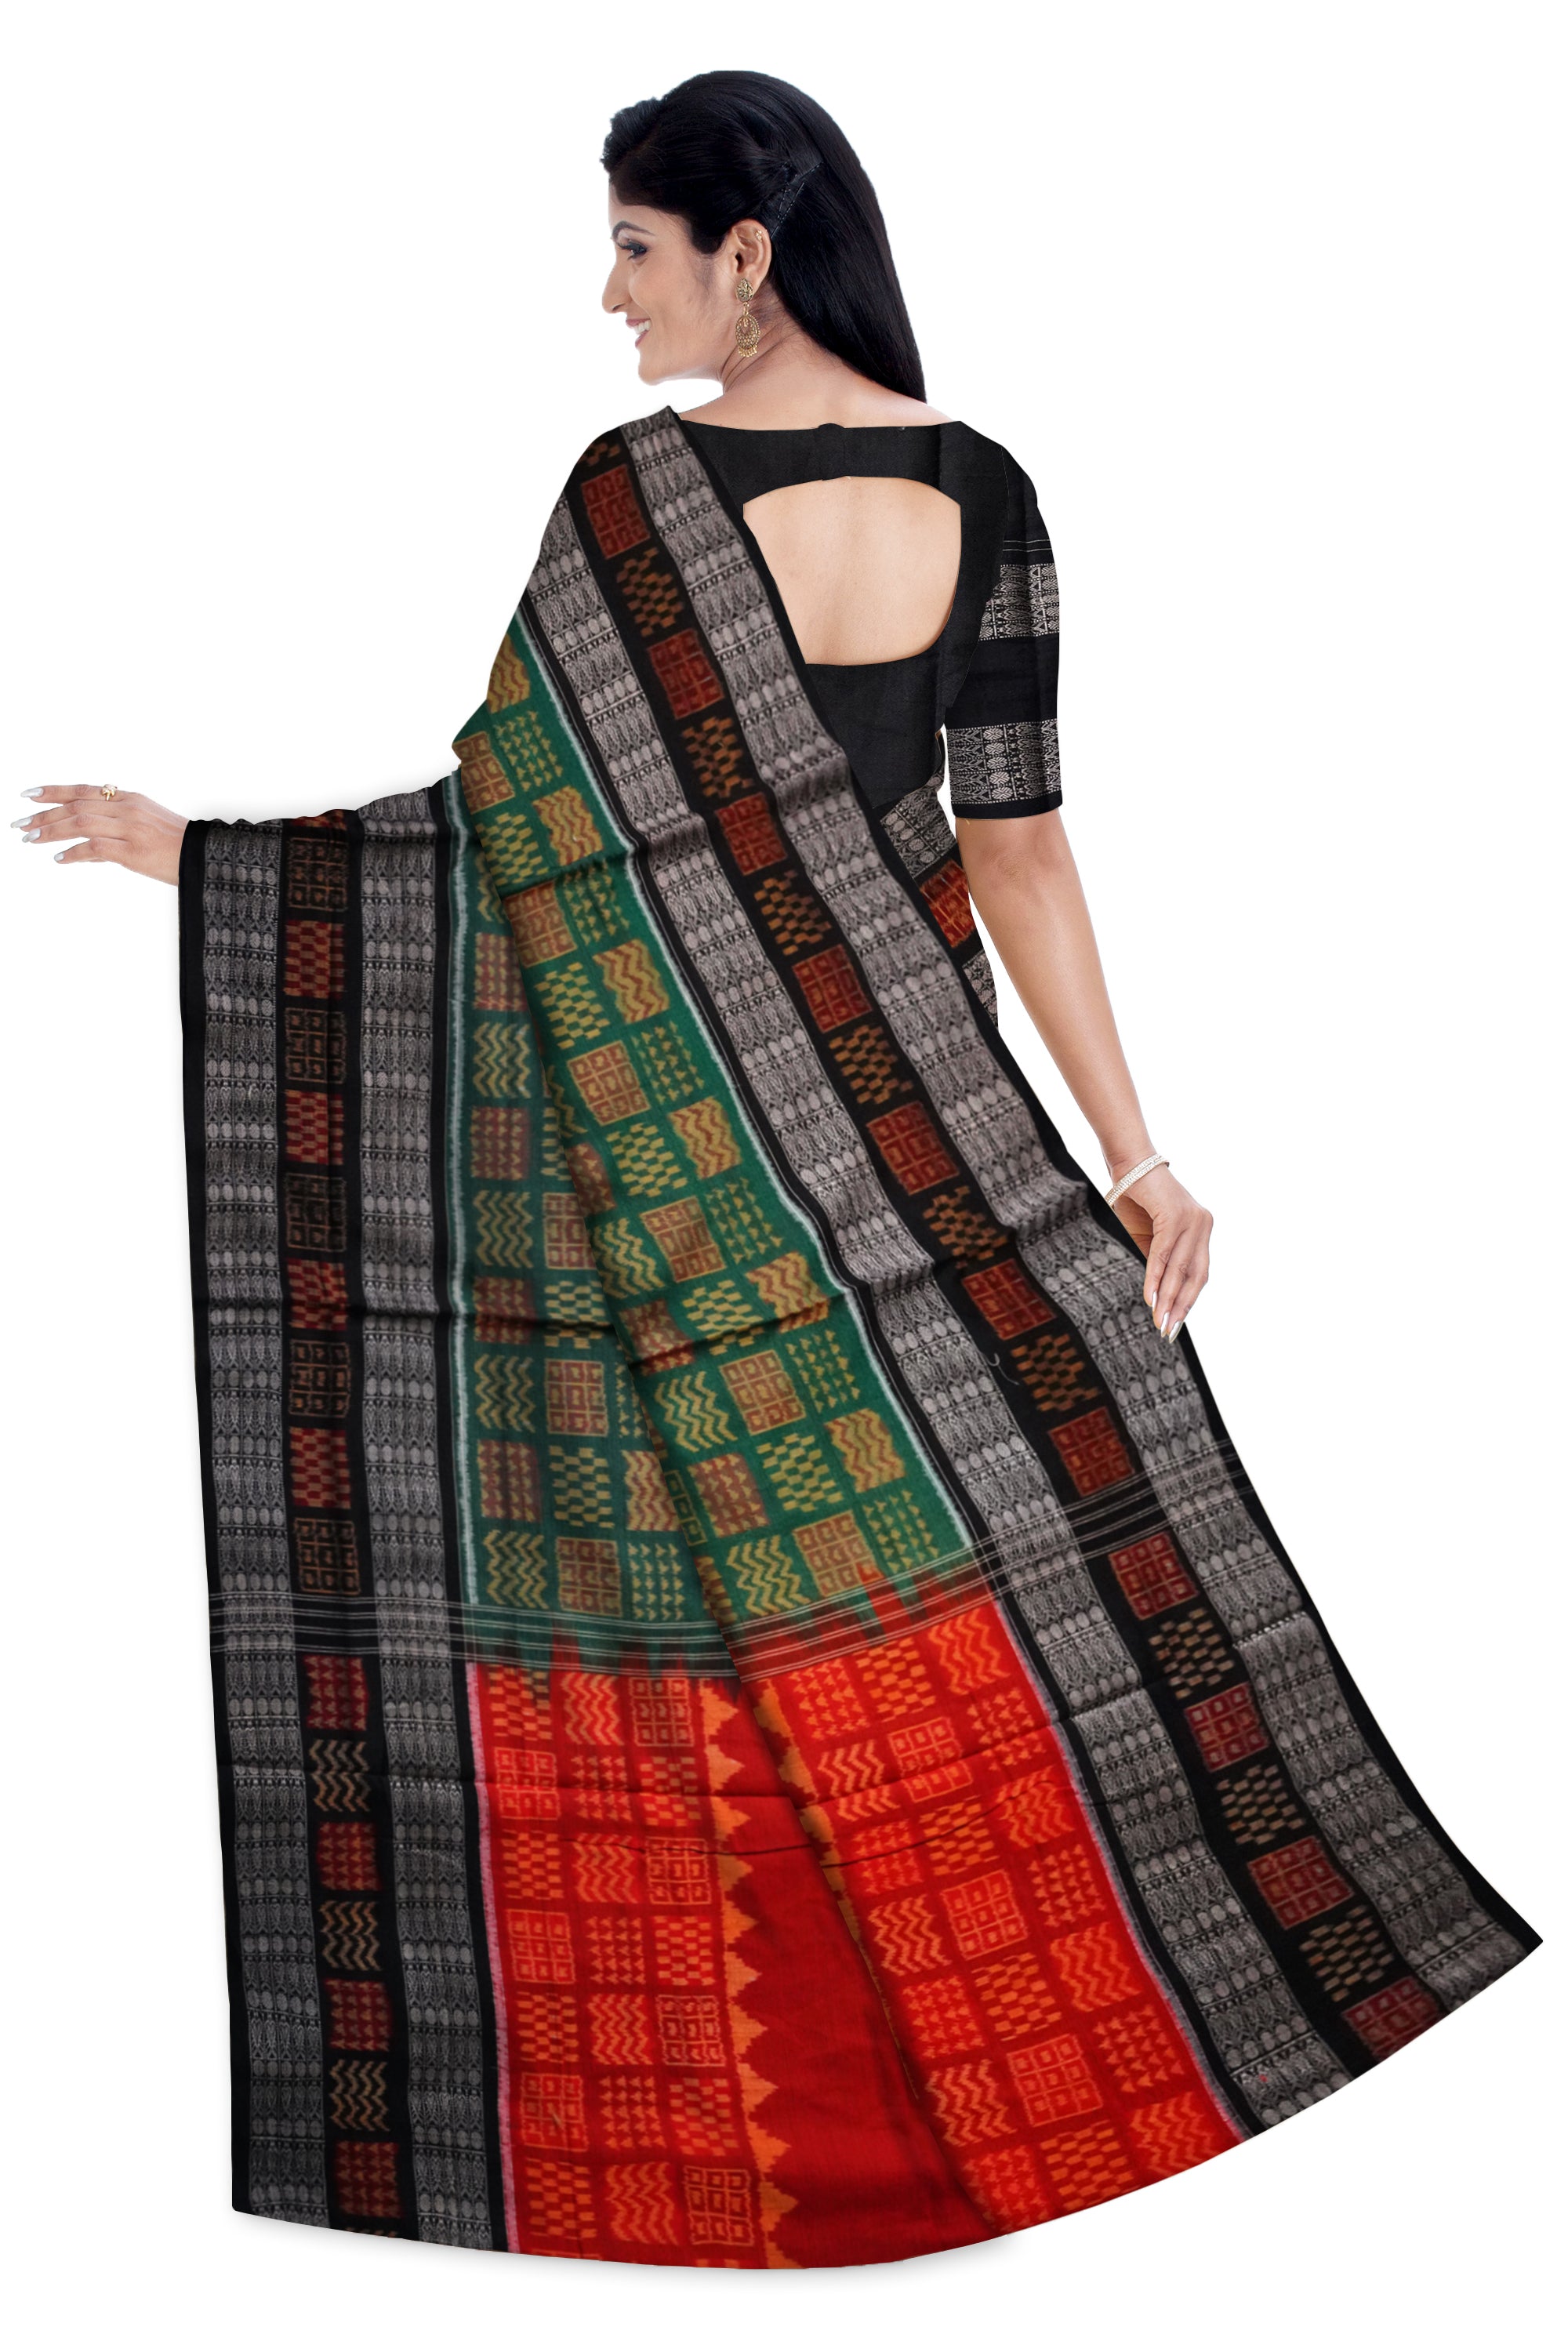 3D design Green, Red and Black color Sambalpuri pure cotton saree. - Koshali Arts & Crafts Enterprise